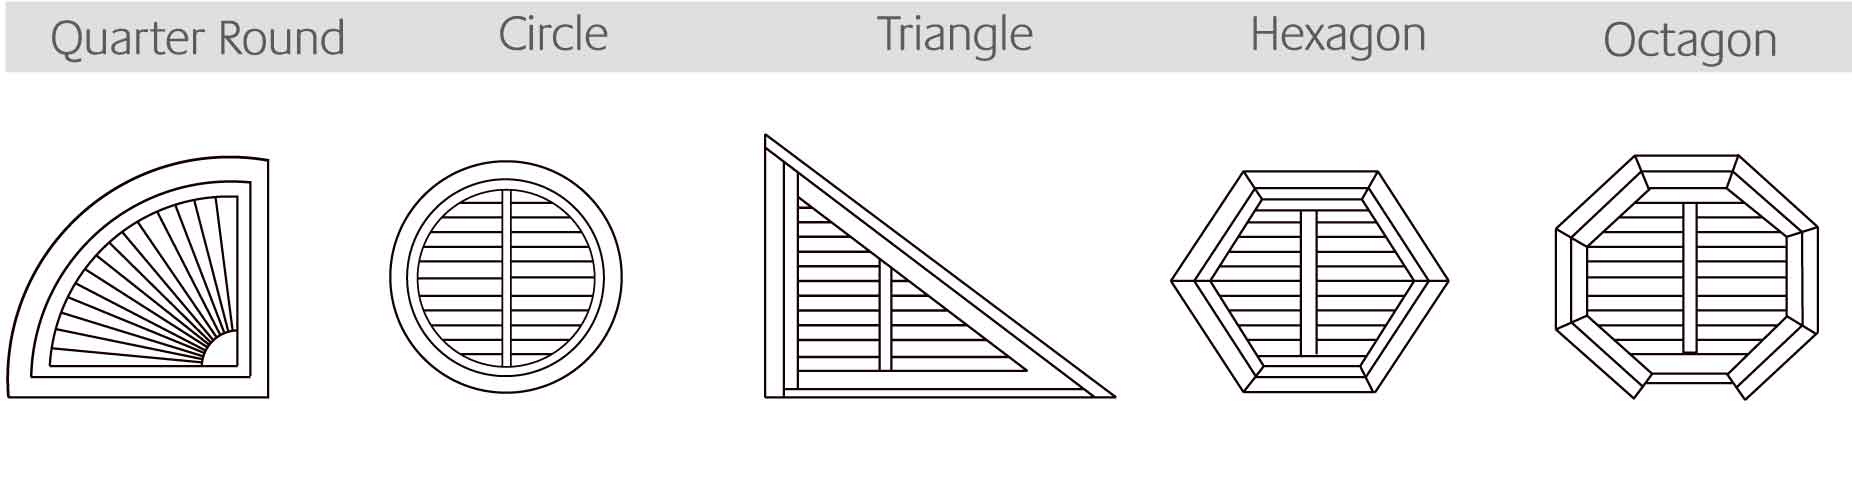 Quarter Round / Circle / Triangle / Hexagon / Octagon shutters